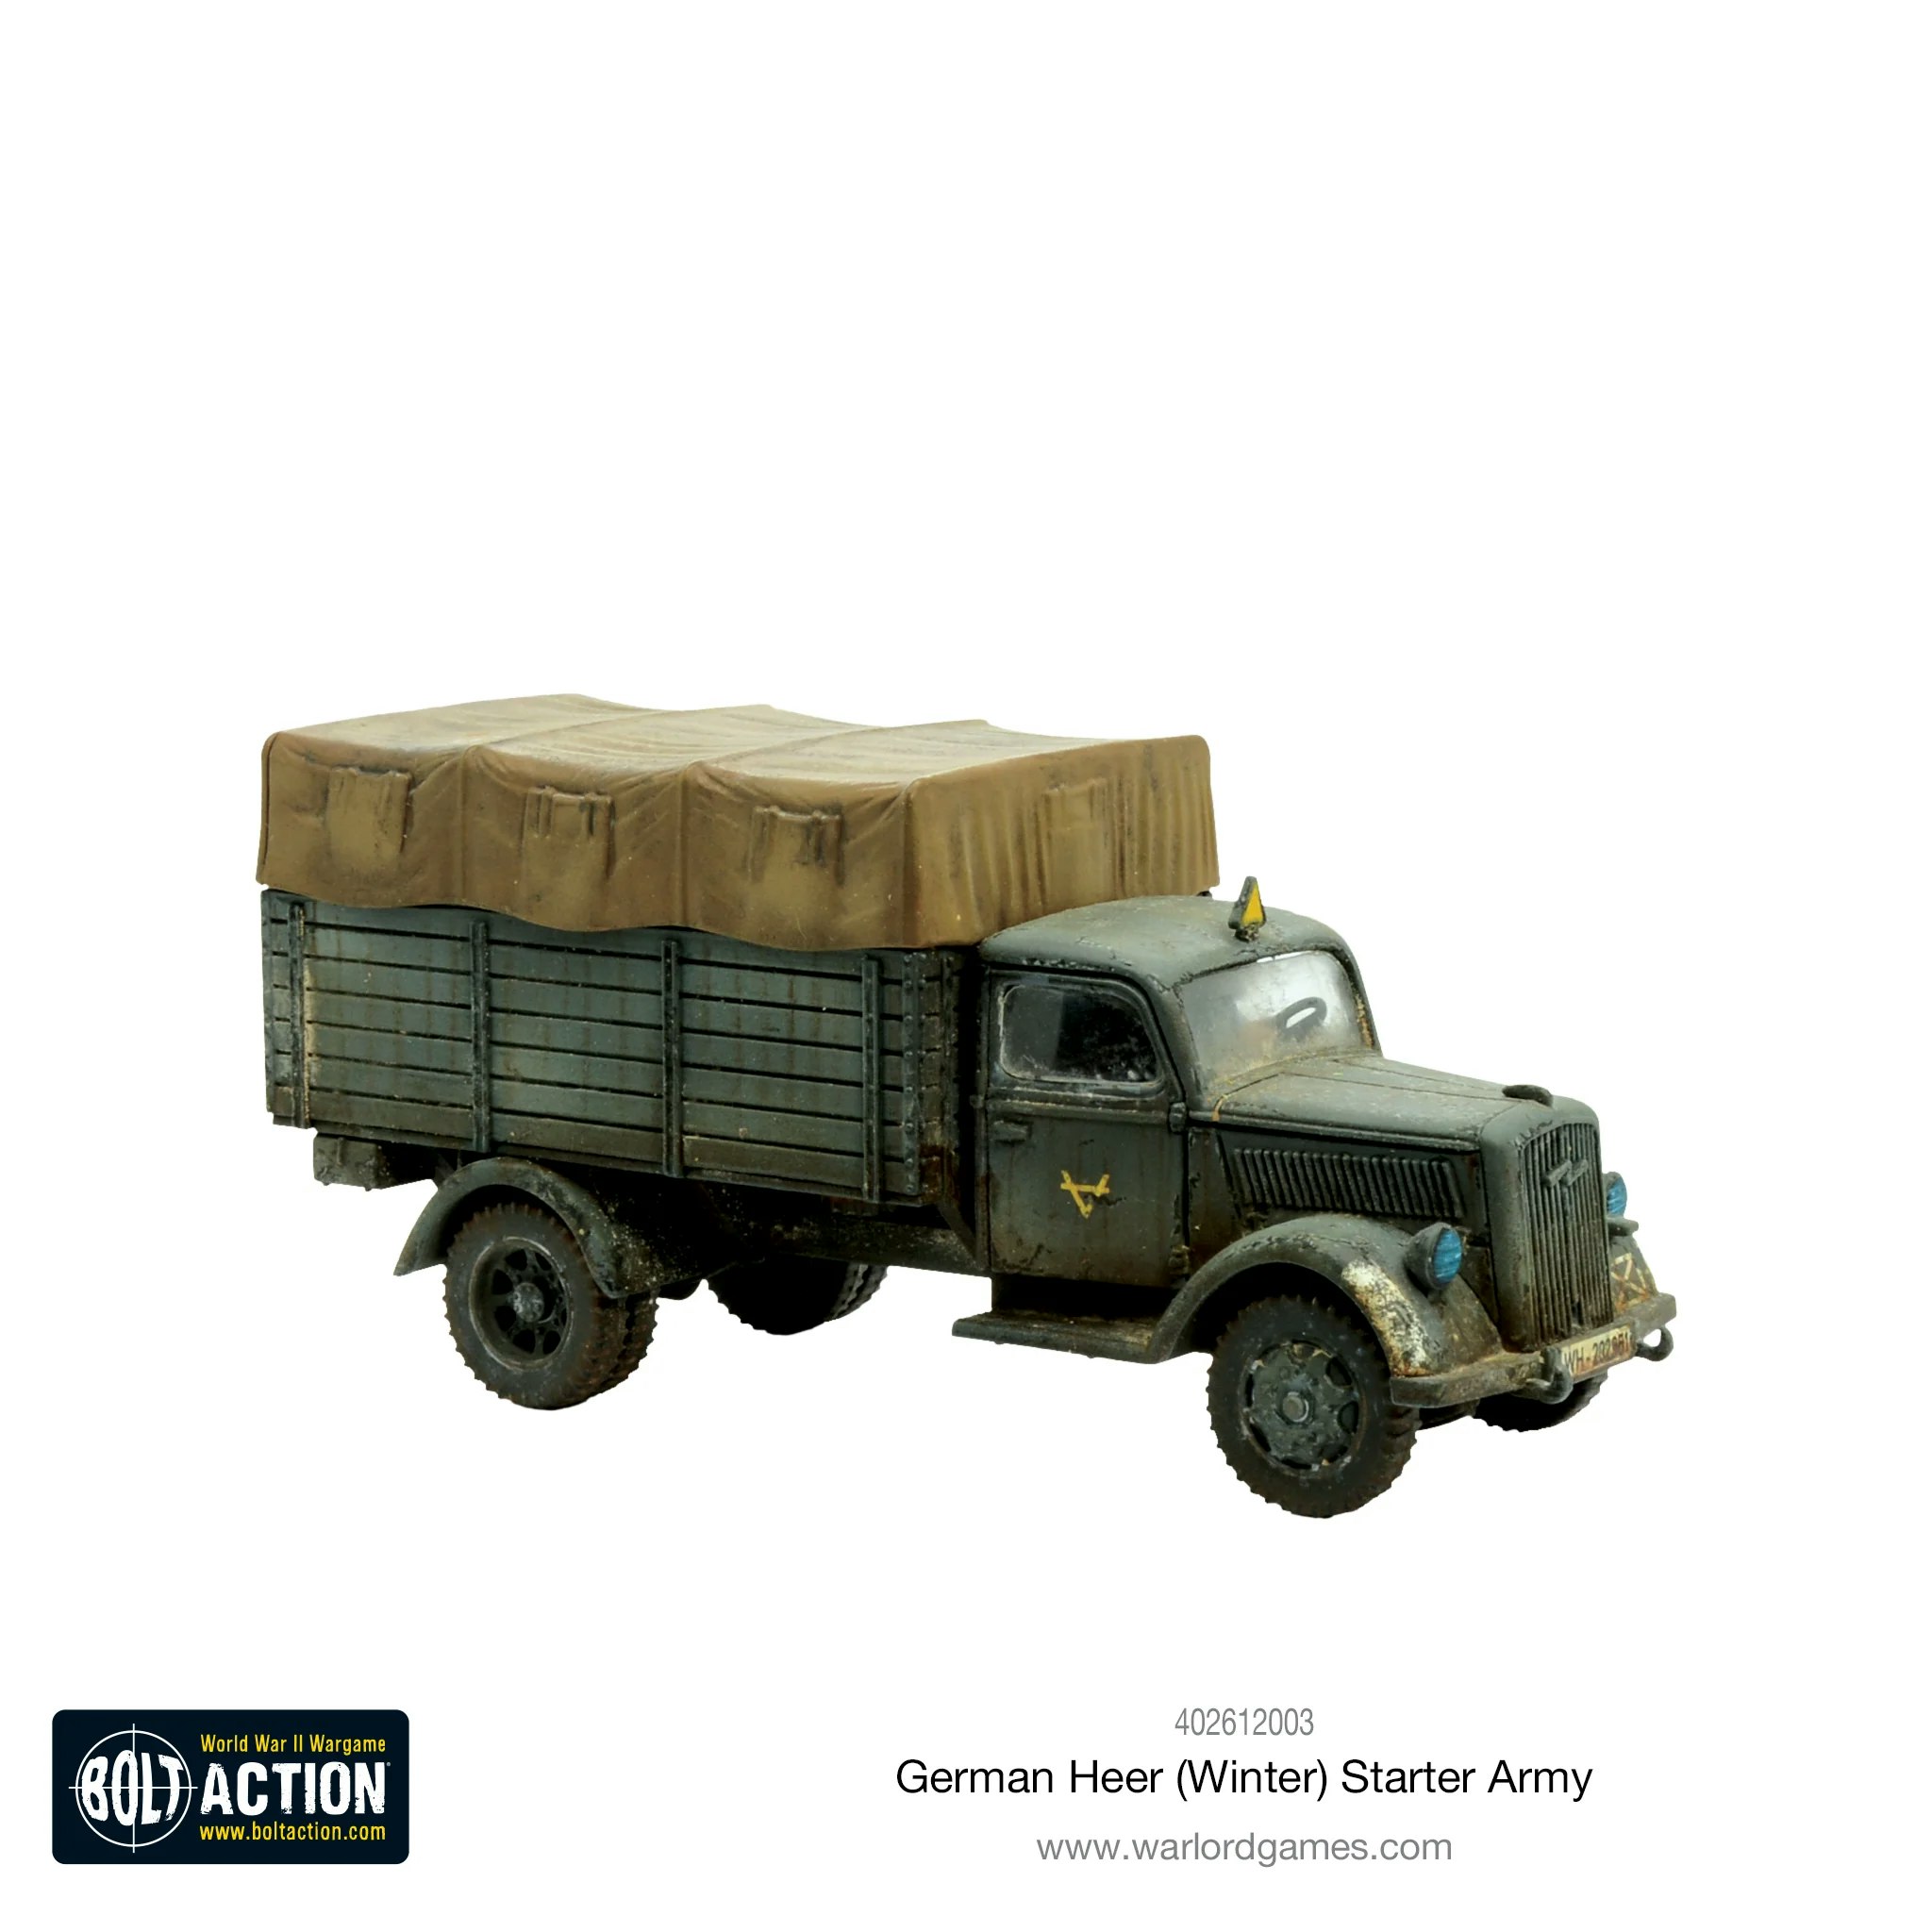 German Heer Winter Starter Army - 402612003